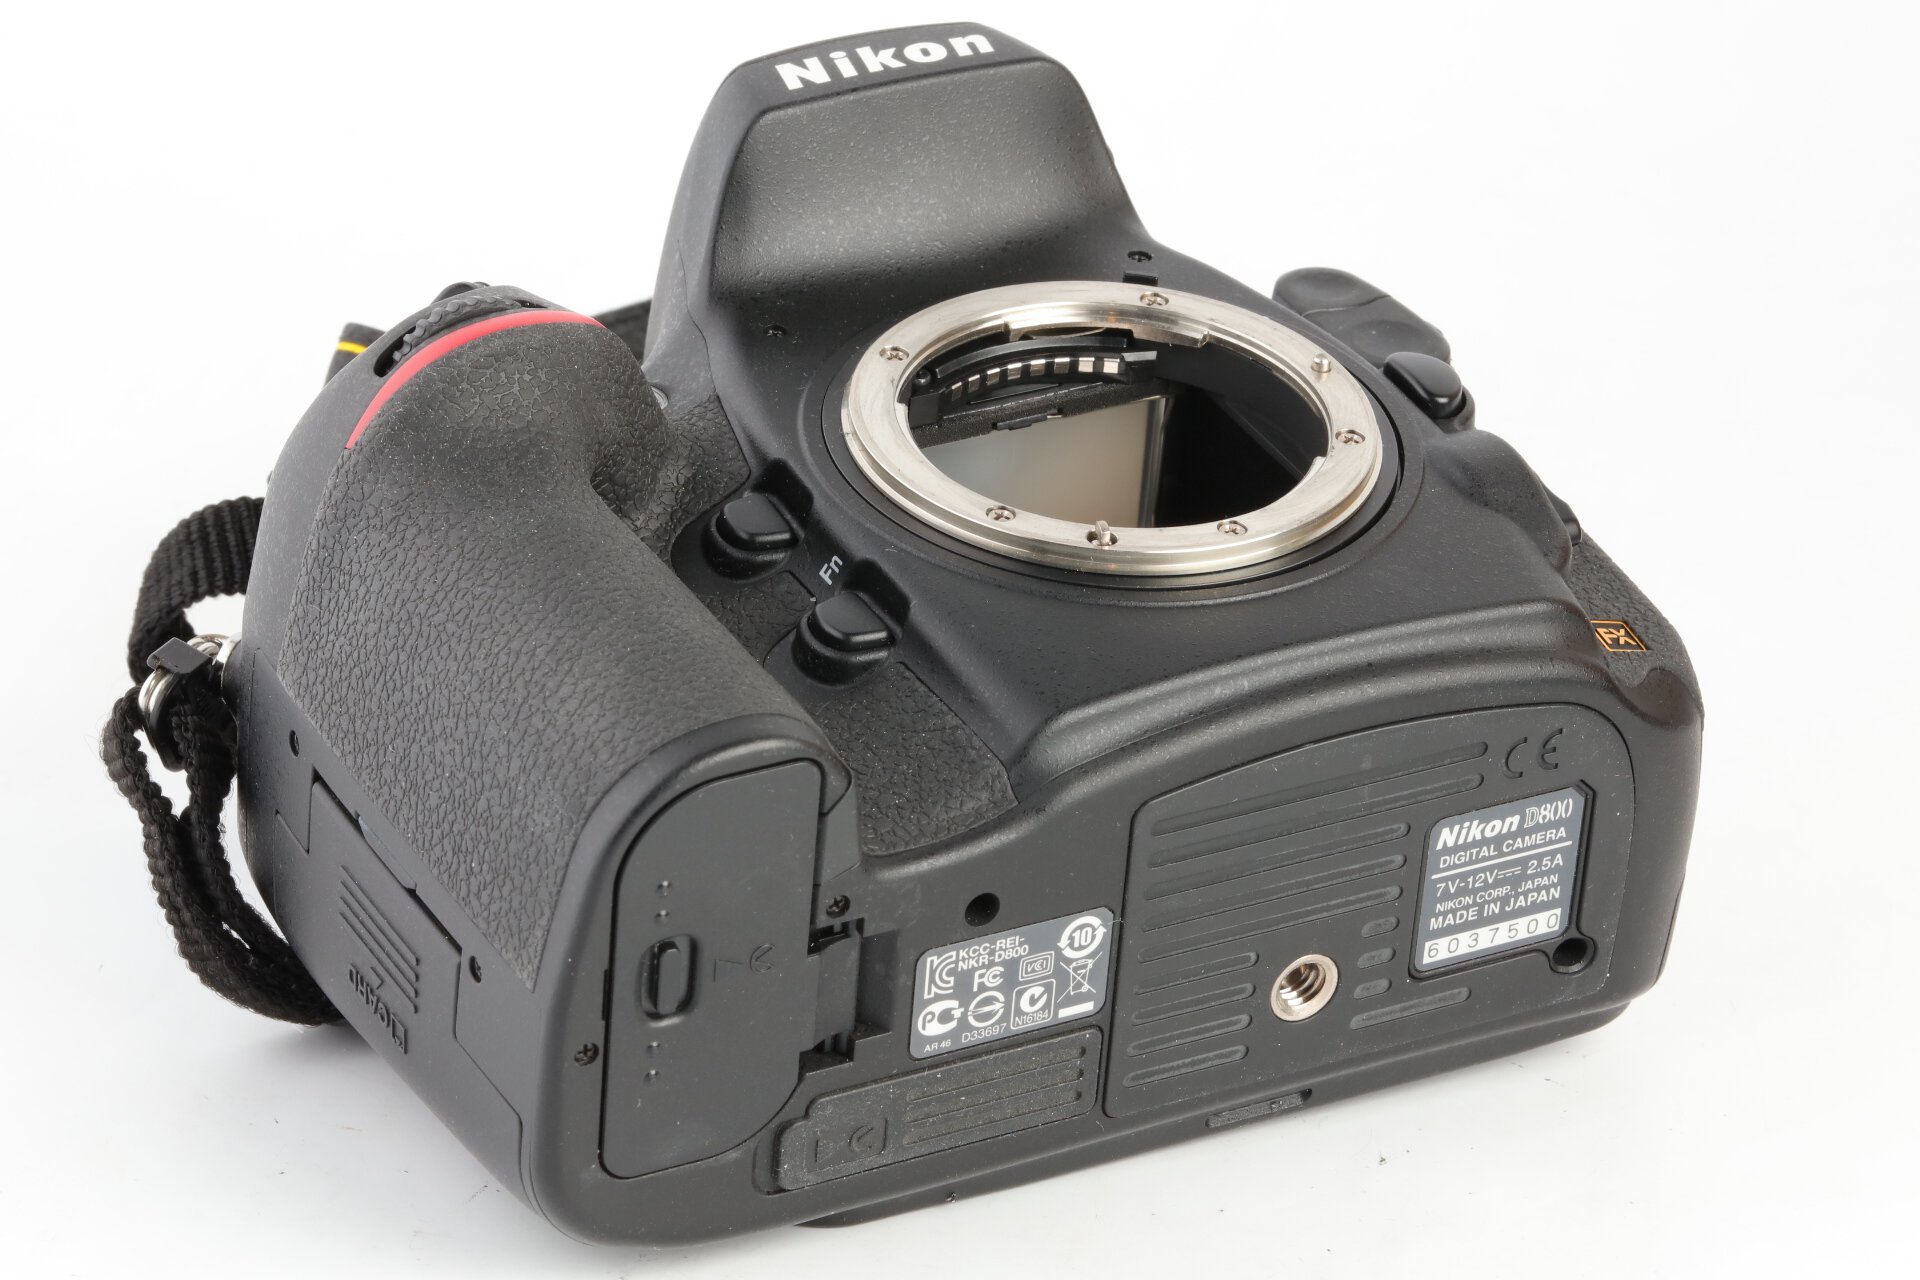 Nikon D800 Gehäuse 3110 Auslösungen